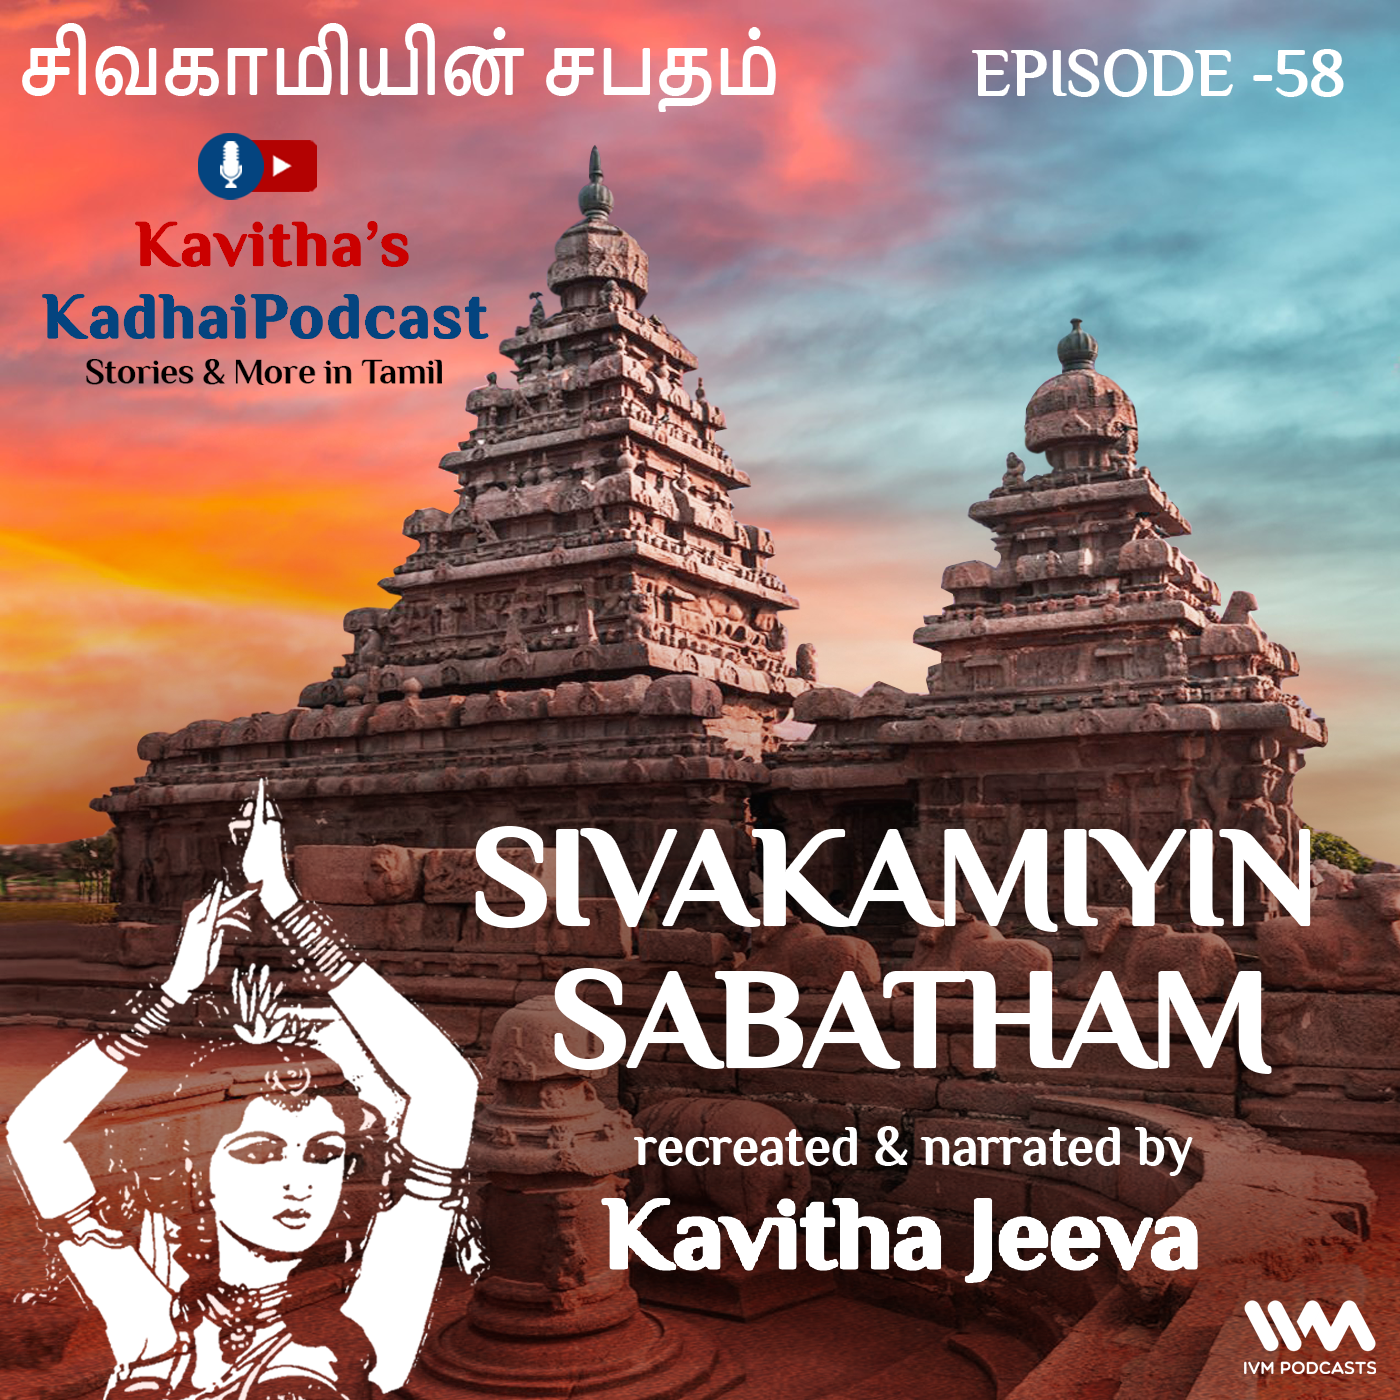 KadhaiPodcast's Sivakamiyin Sabatham - Episode # 58